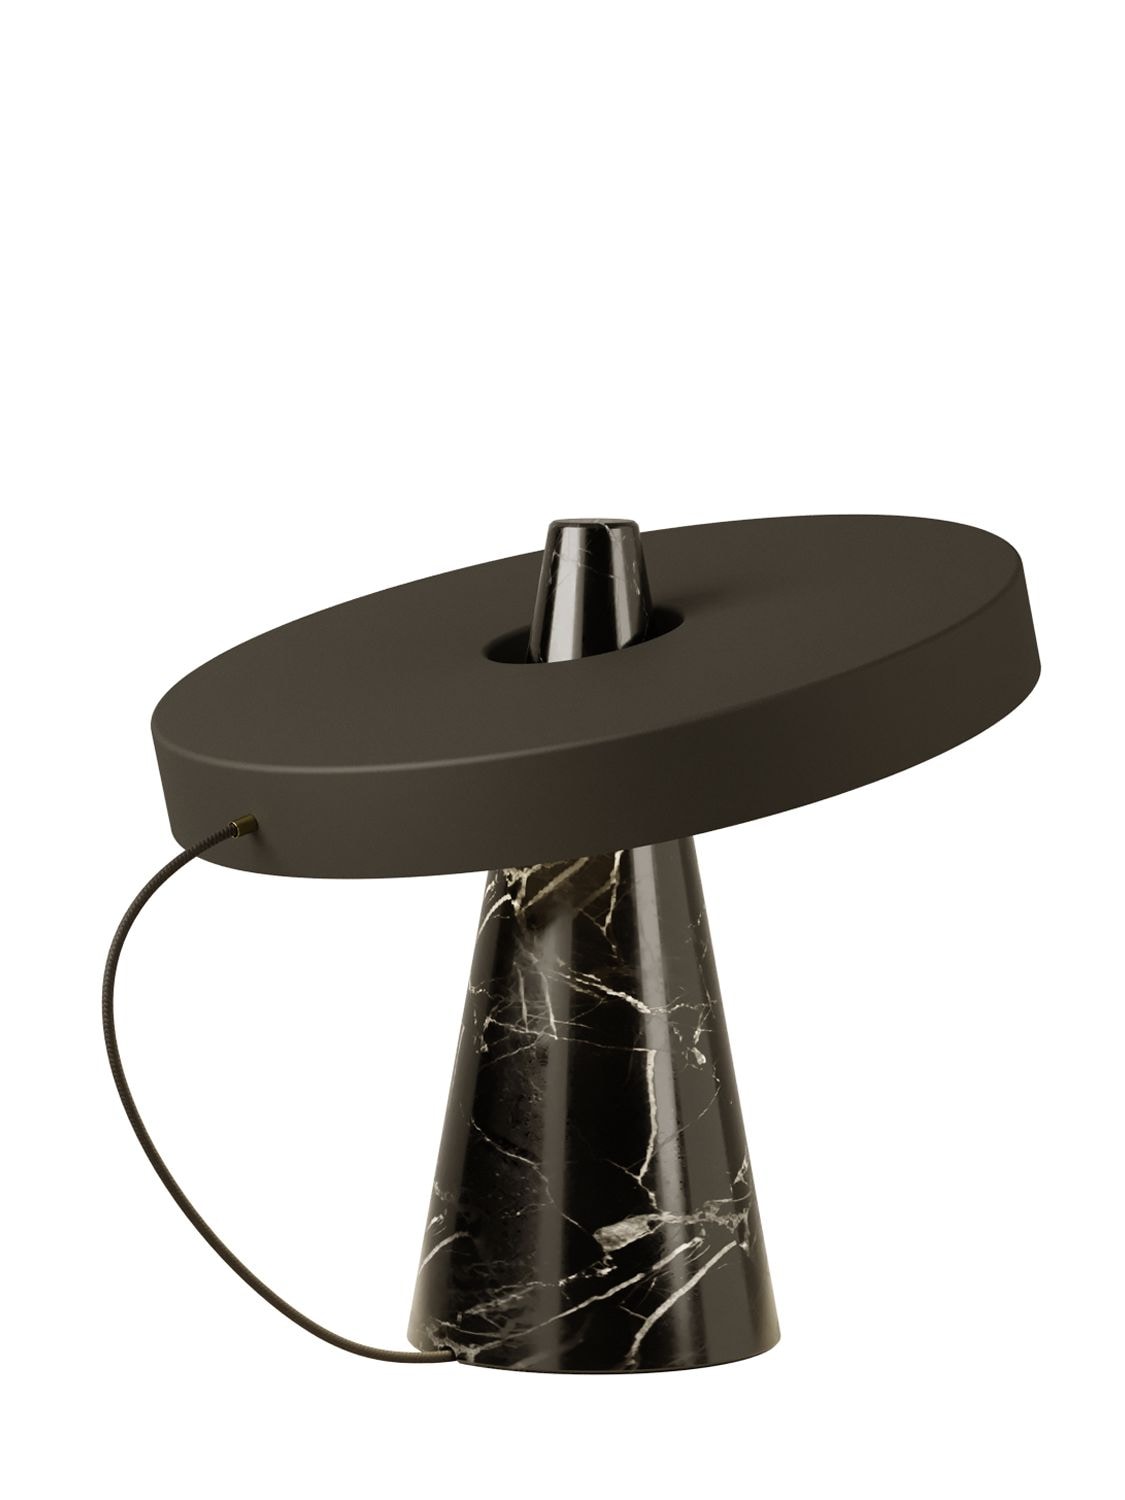 Edizioni Ed039 Table Lamp In Black